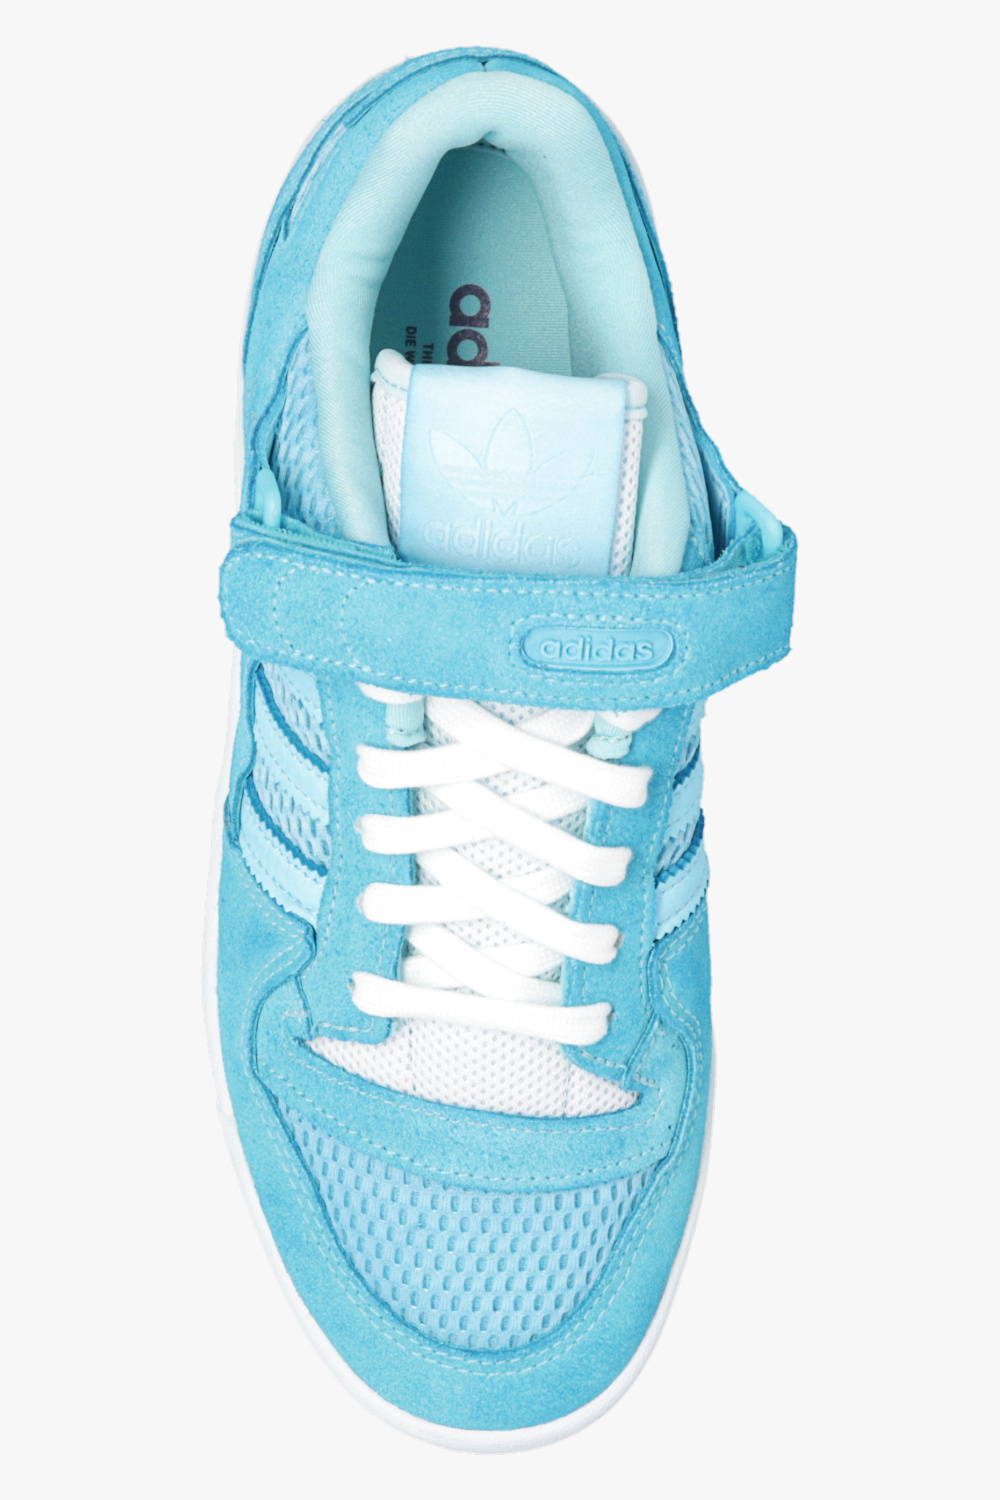 sneakers Blue Top New - York Y-Tank ADIDAS 8K\' Thebe \'Forum Low 84 - adidas IetpShops Australia Magugu Tennis Originals x